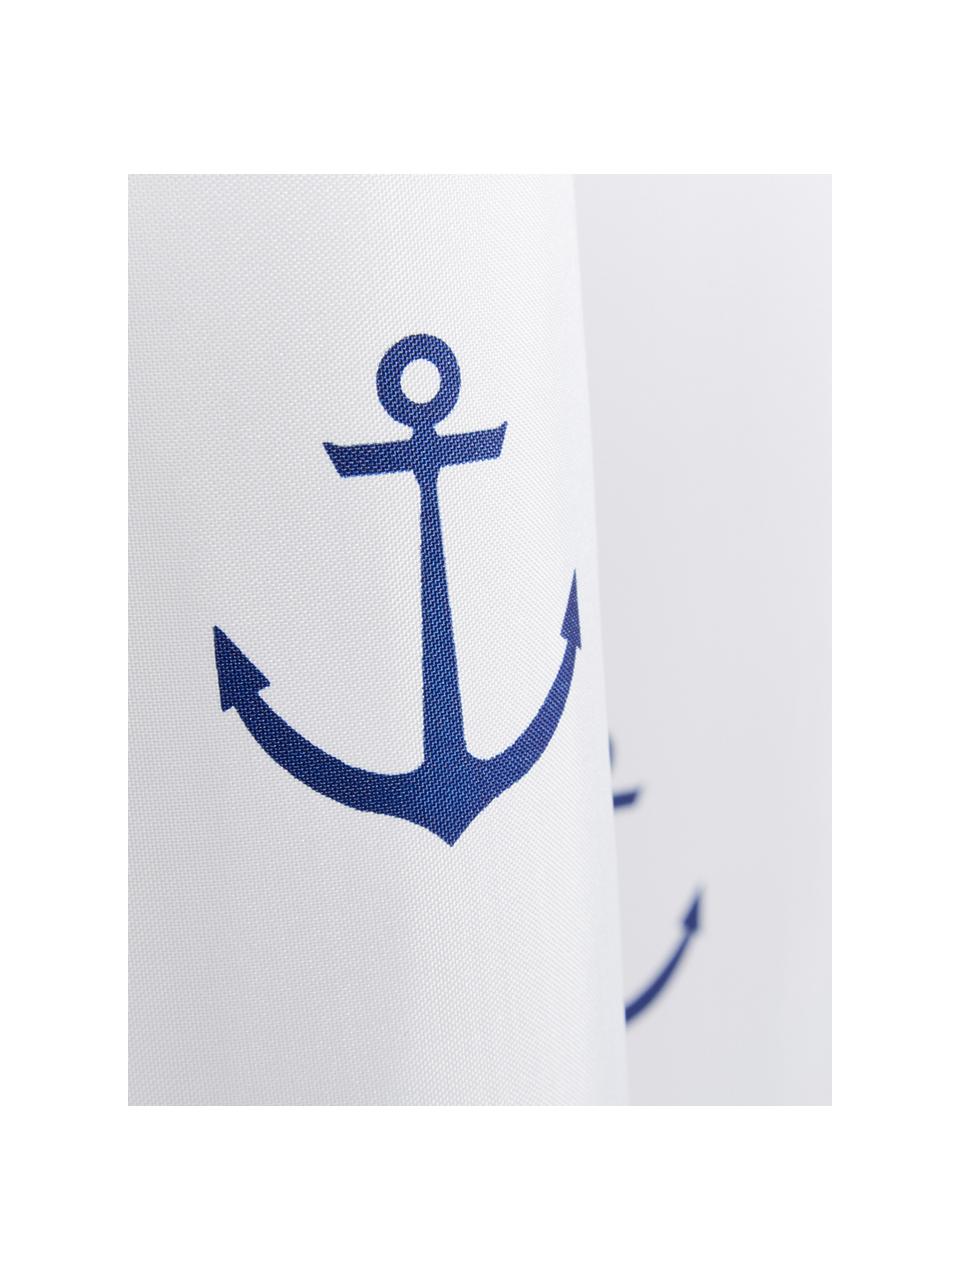 Douchegordijn Anchor met anker print, 100% polyester
Waterafstotend, niet waterdicht, Wit, blauw, B 180 x L 200 cm